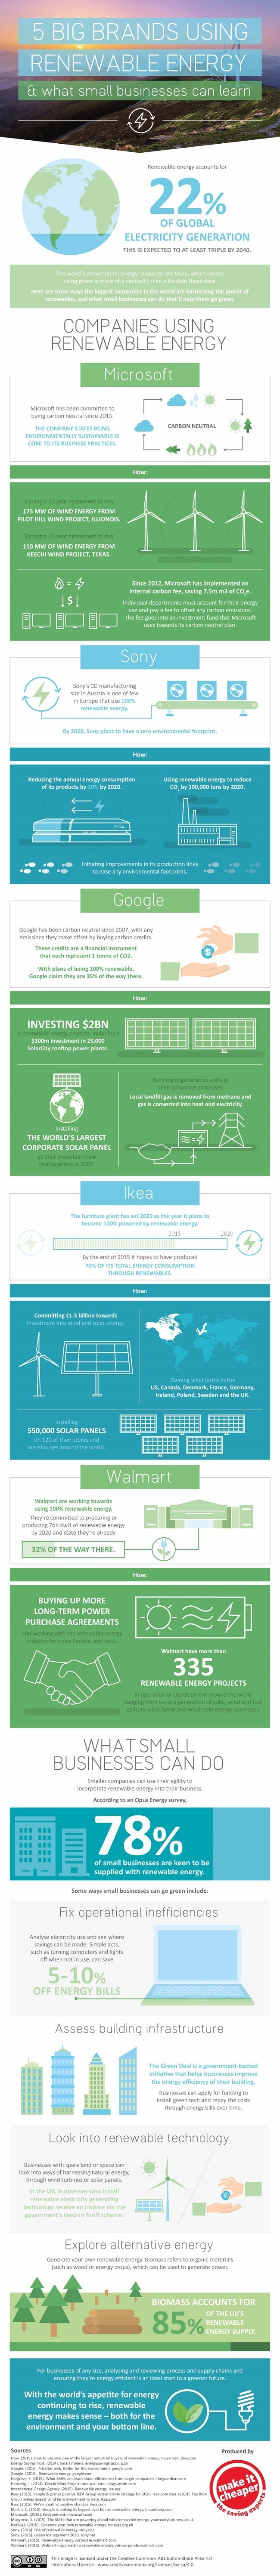 5 biggest brands using clean energy